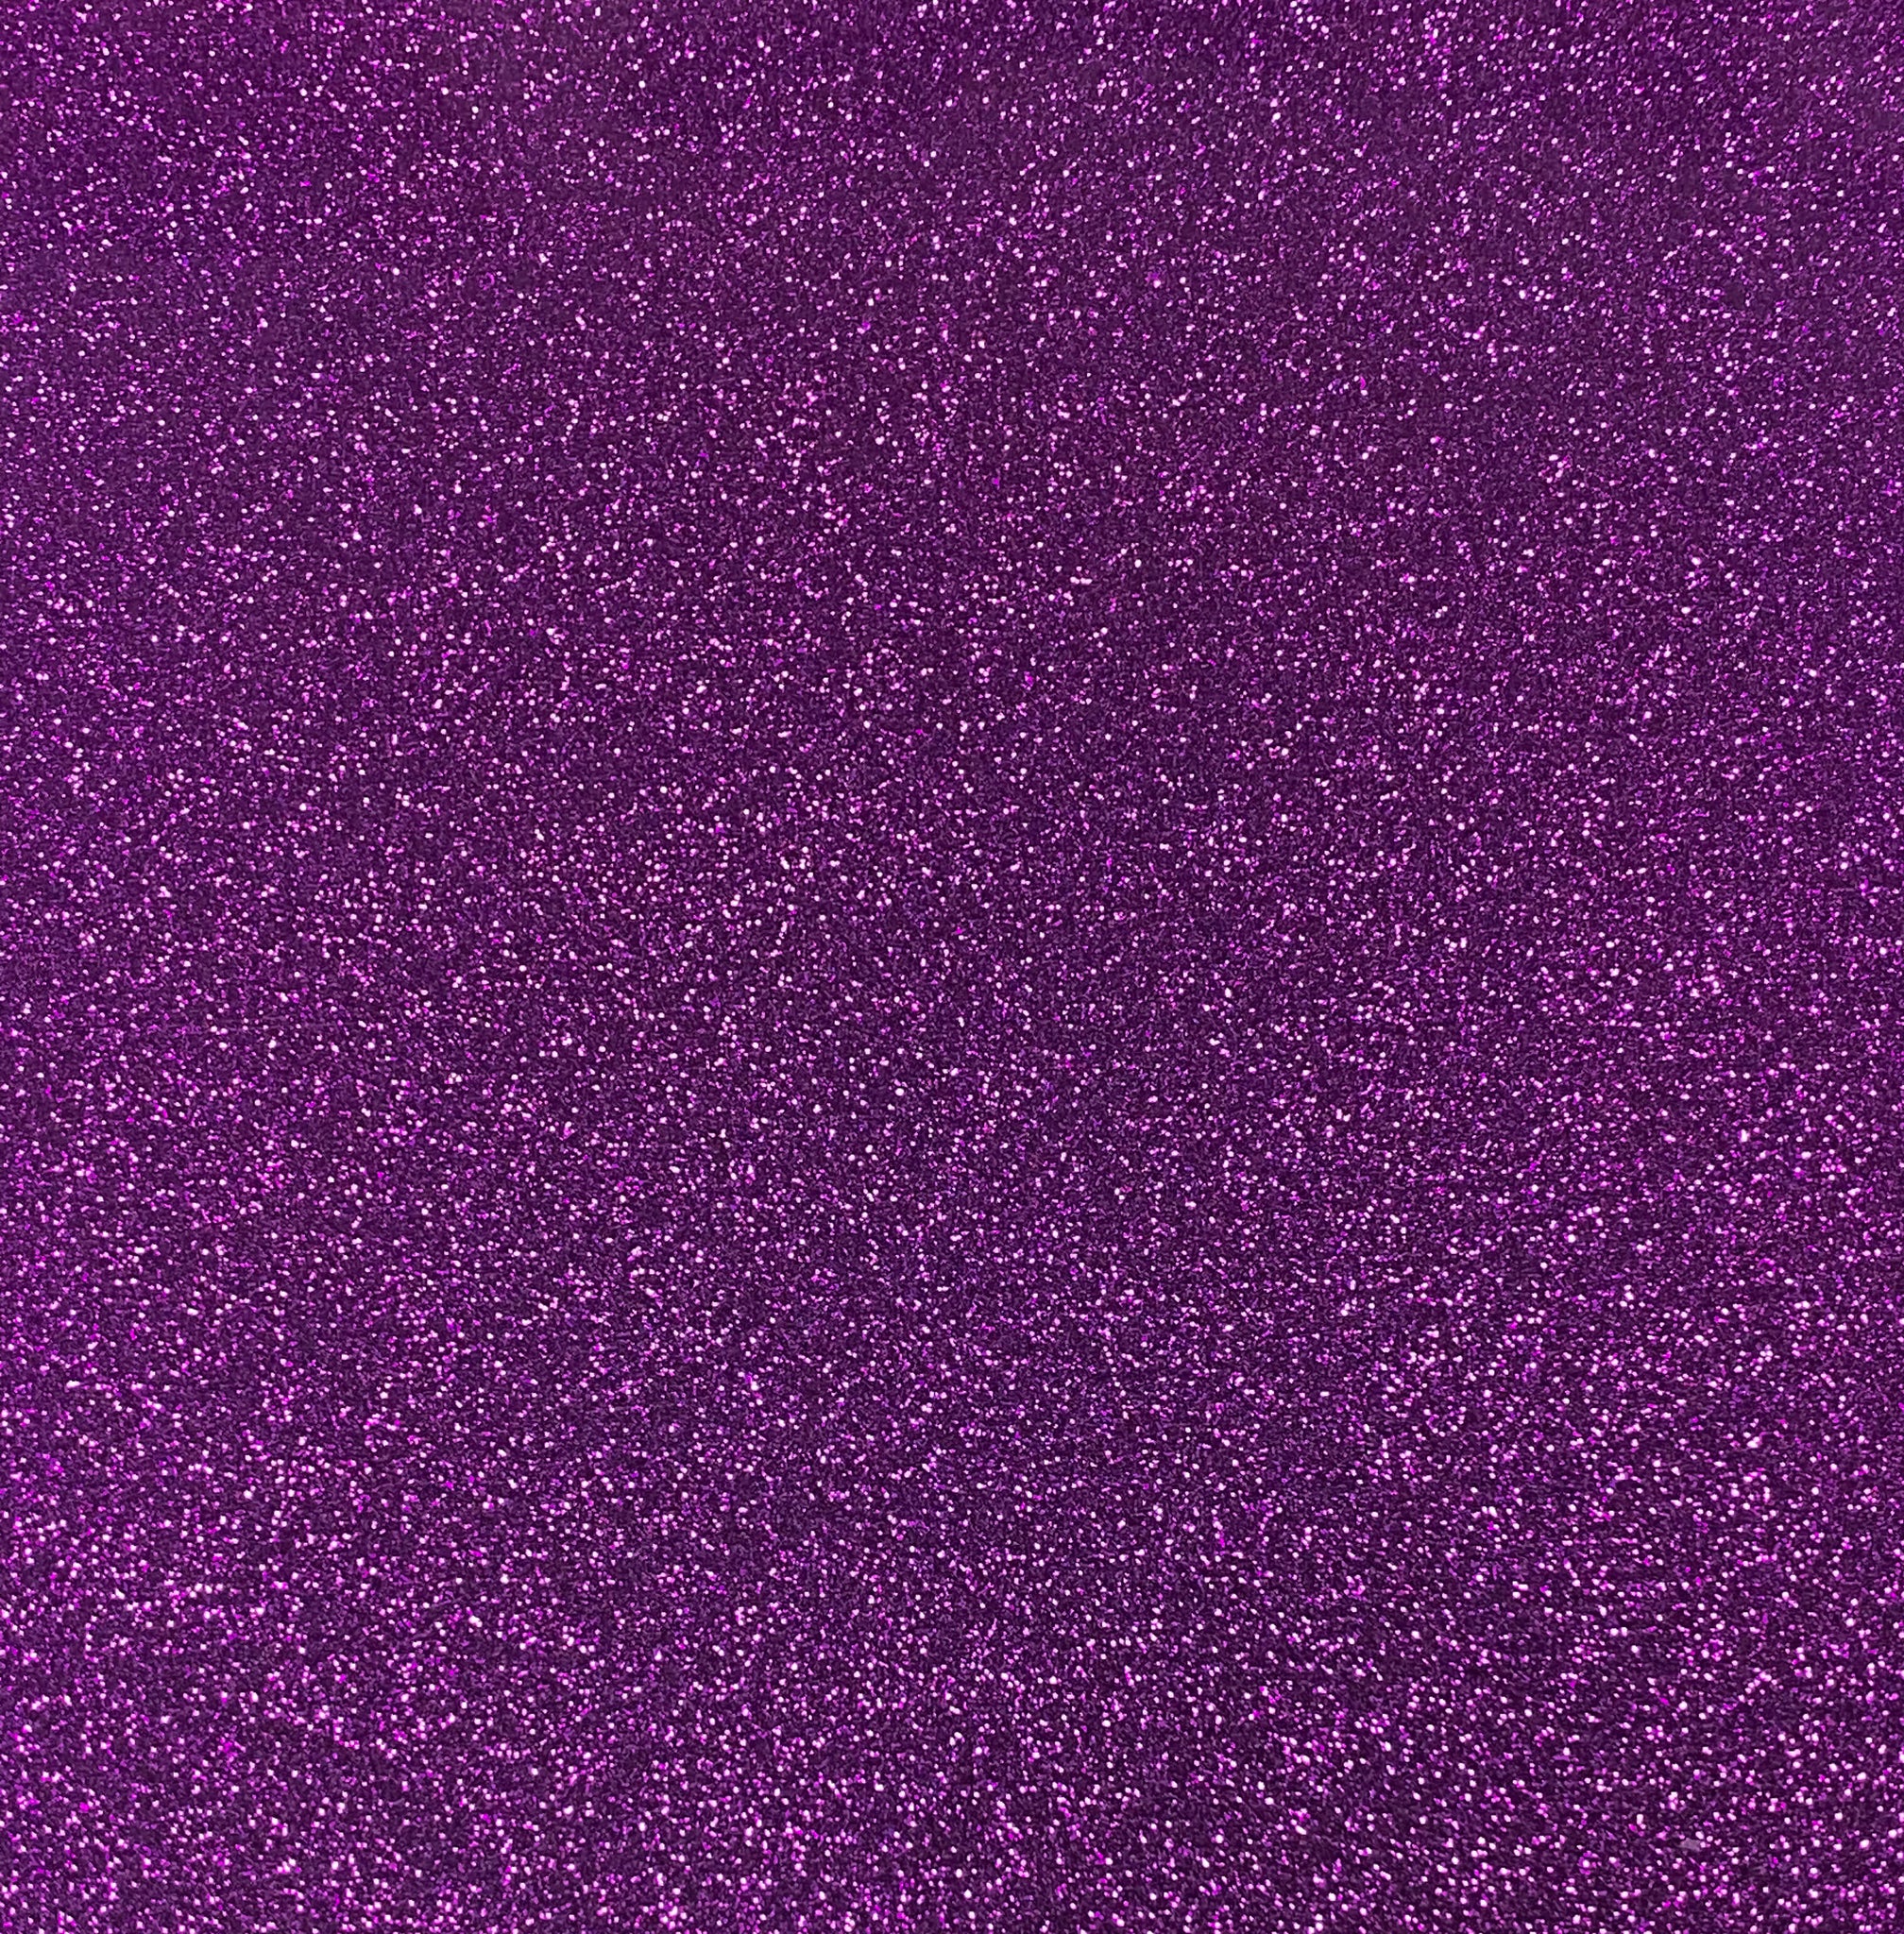 Lavender Glitter Flake Sheet 12”x20”